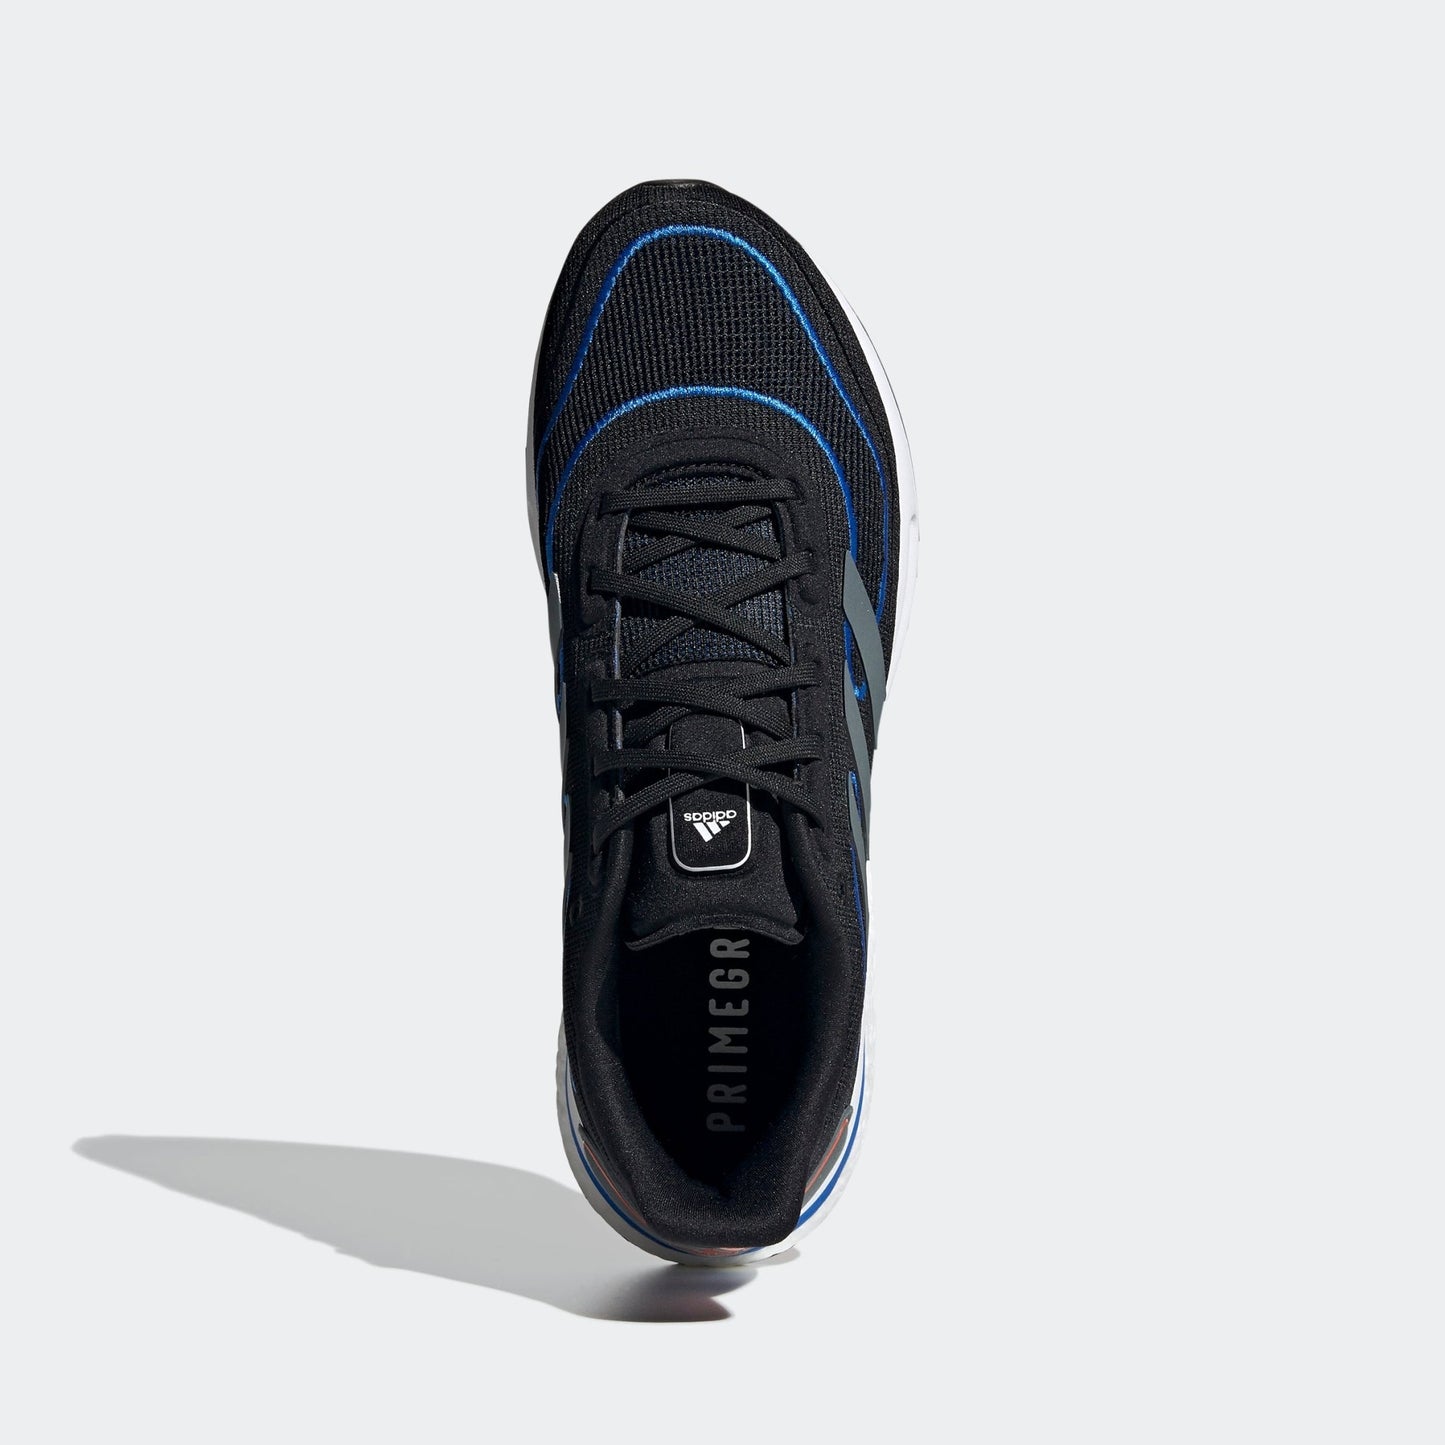 ADIDAS - נעלי ספורט לגברים SUPERNOVA M בצבע שחור וכחול - MASHBIR//365